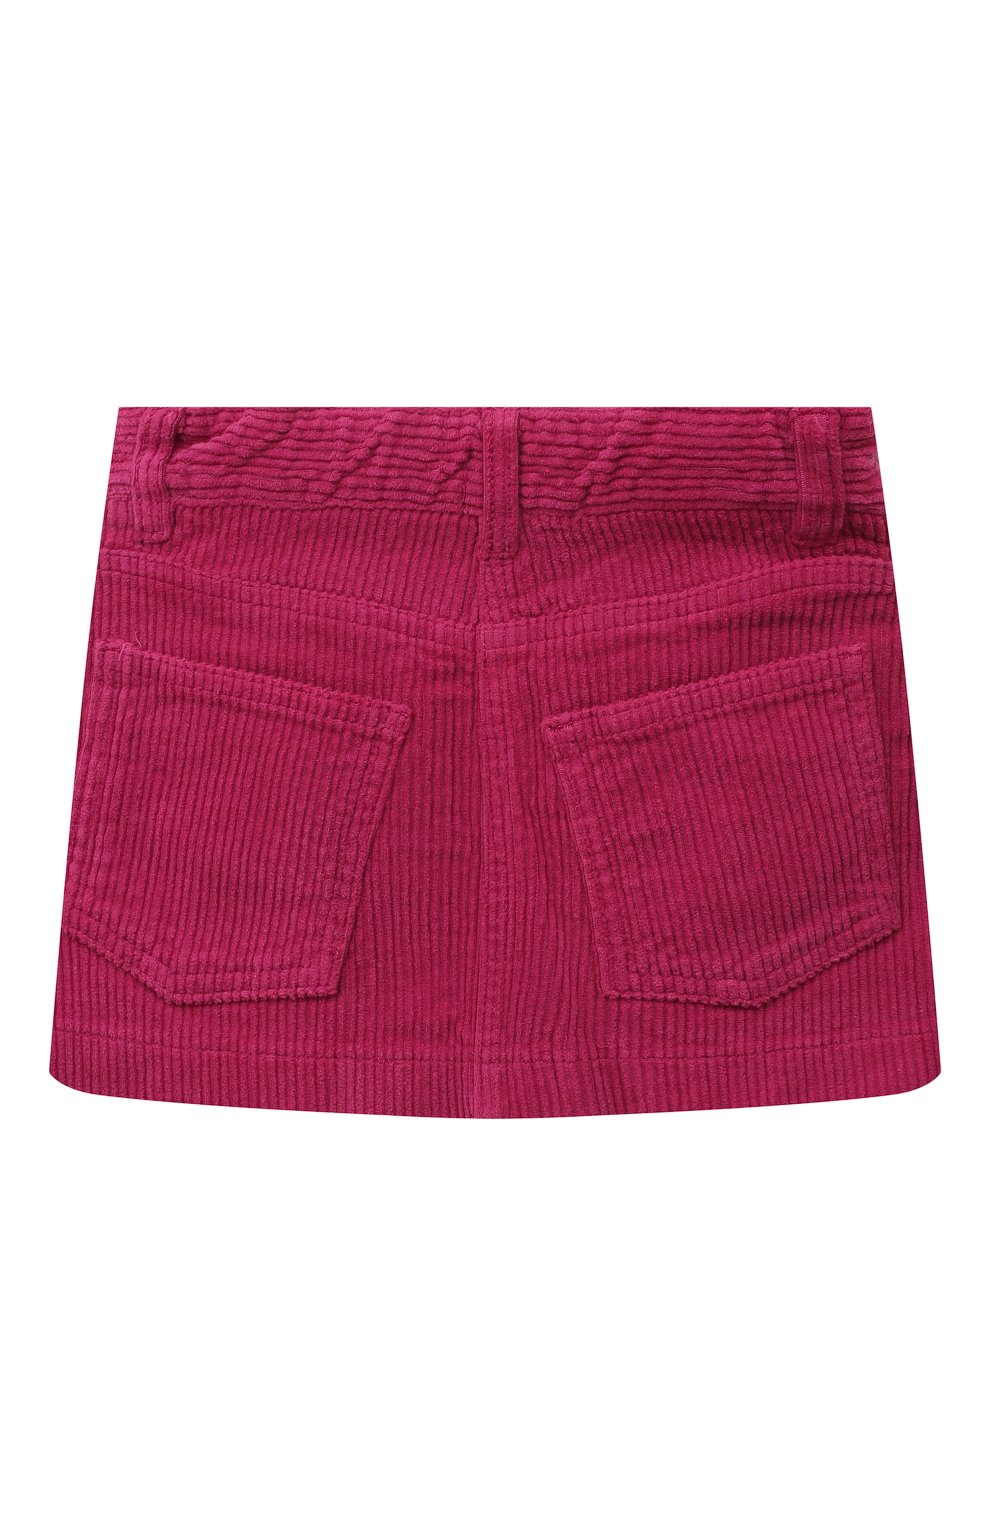 Детская хлопковая юбка IL GUFO фуксия цвета, арт. A23GN216V6012/2A-4A | Фото 2 (Случай: Повседневный; Мате риал сплава: Проставлено; Нос: Не проставлено; Материал внешний: Хлопок)